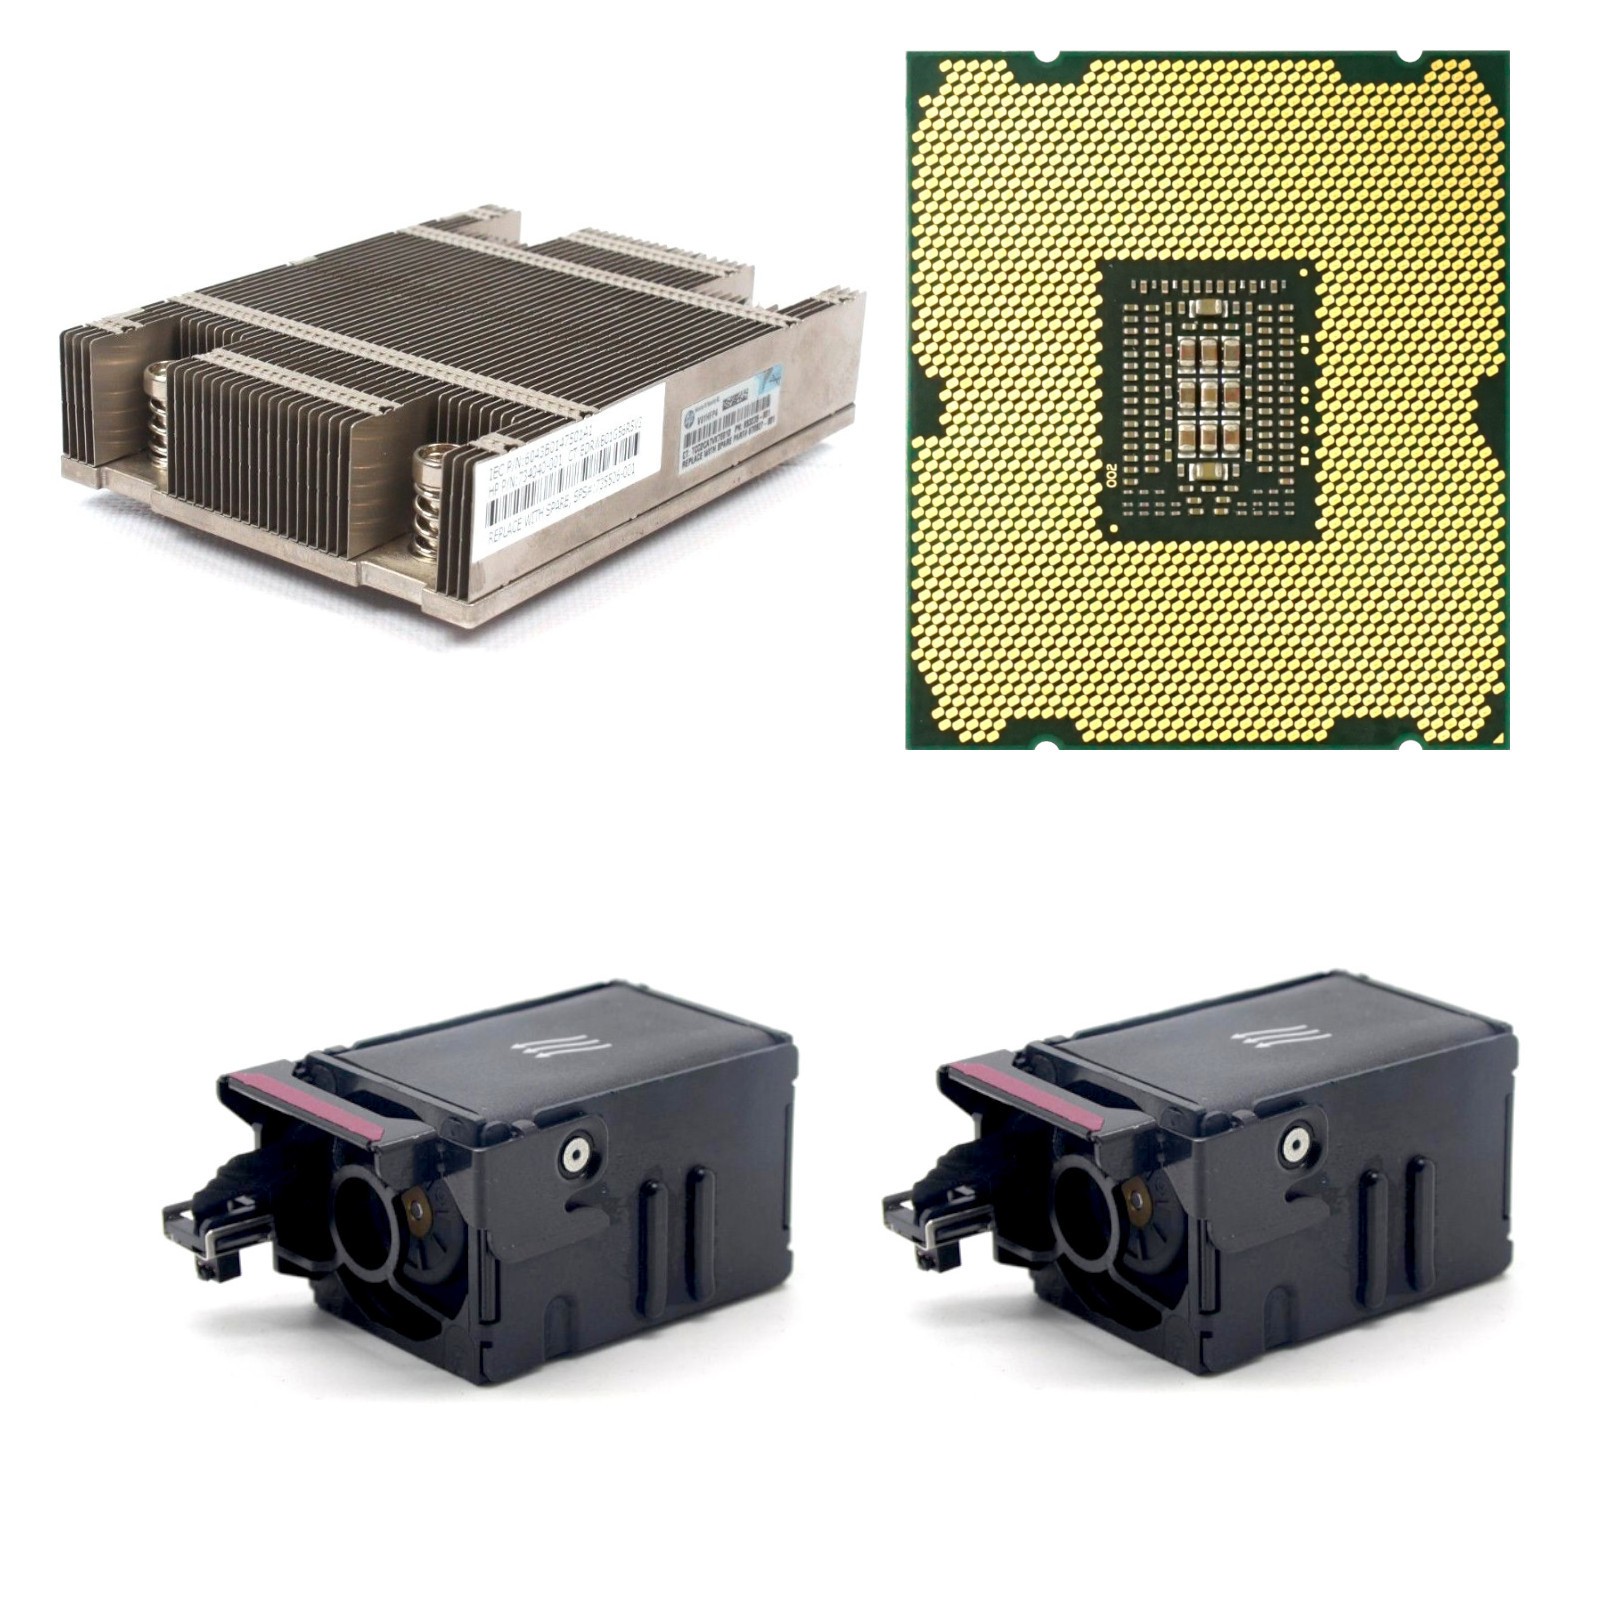 HP (745736-B21) ProLiant DL360P G8 (Screw Down) - Intel Xeon E5-2620 CPU2 Kit